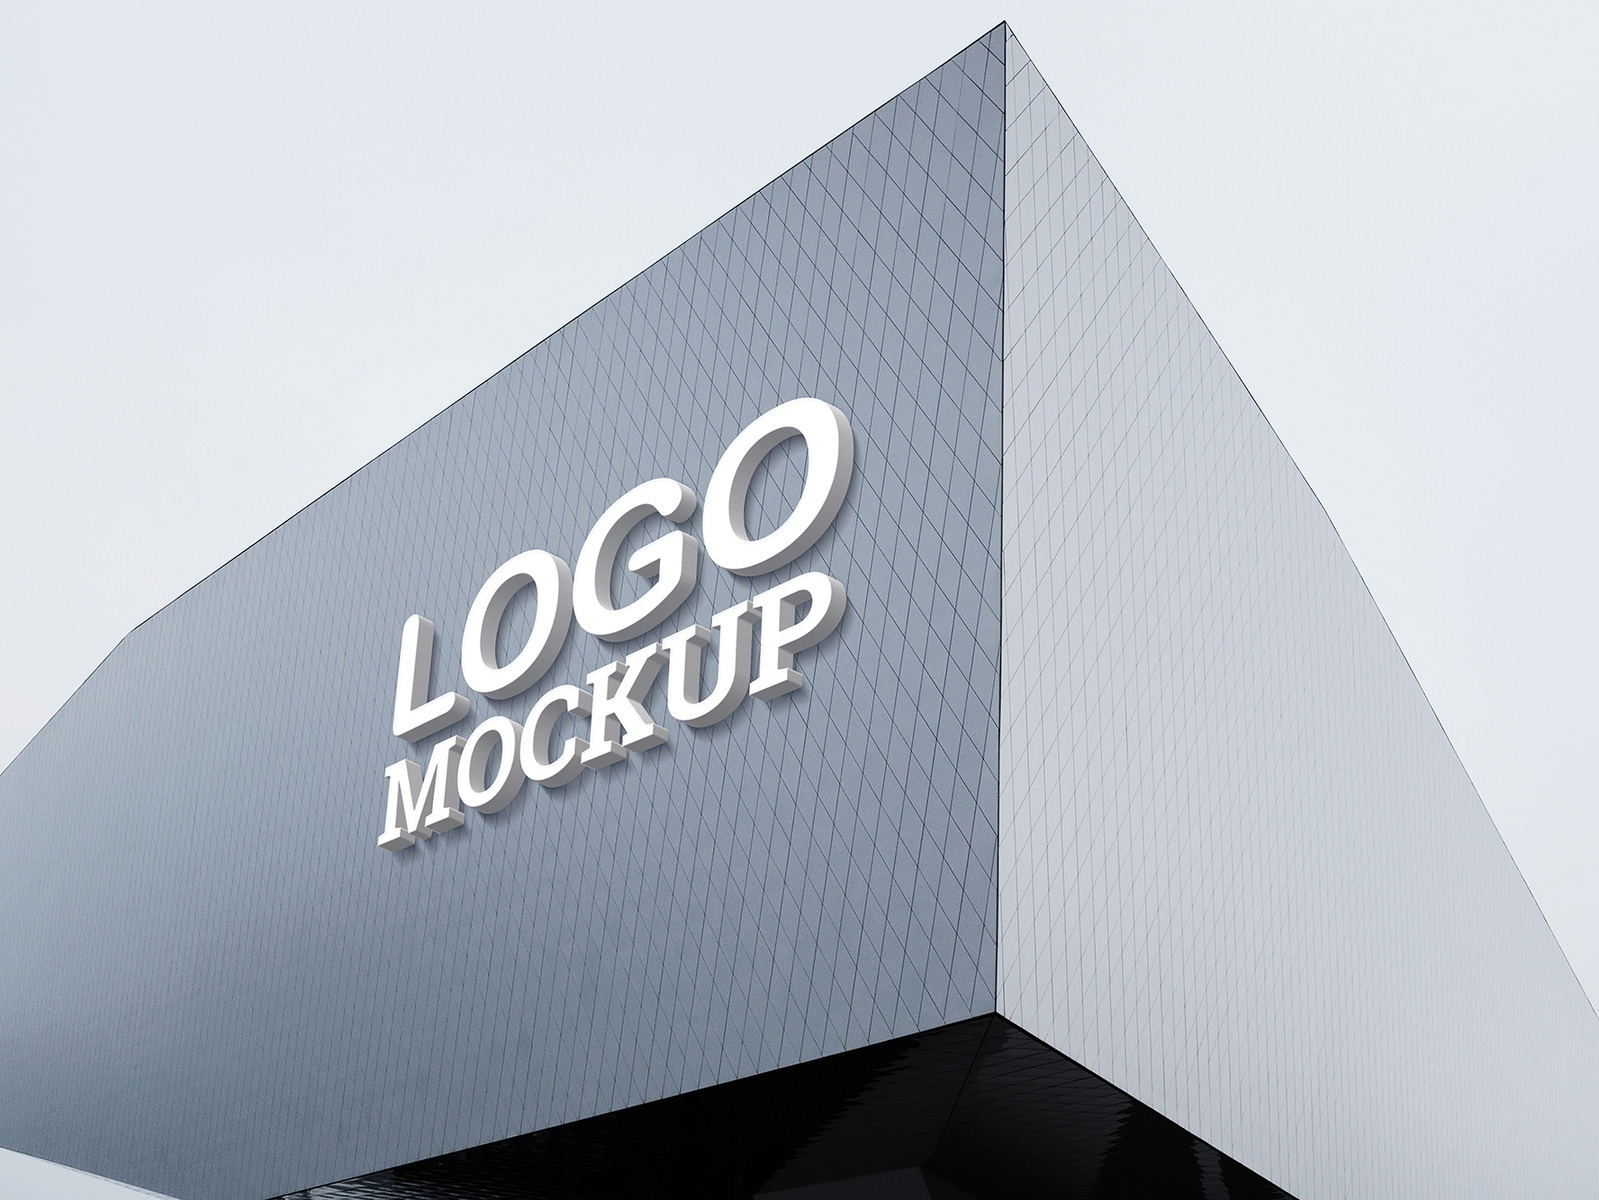 Download 3d logo mockup v3 - free psd by MockupHero on Dribbble PSD Mockup Templates